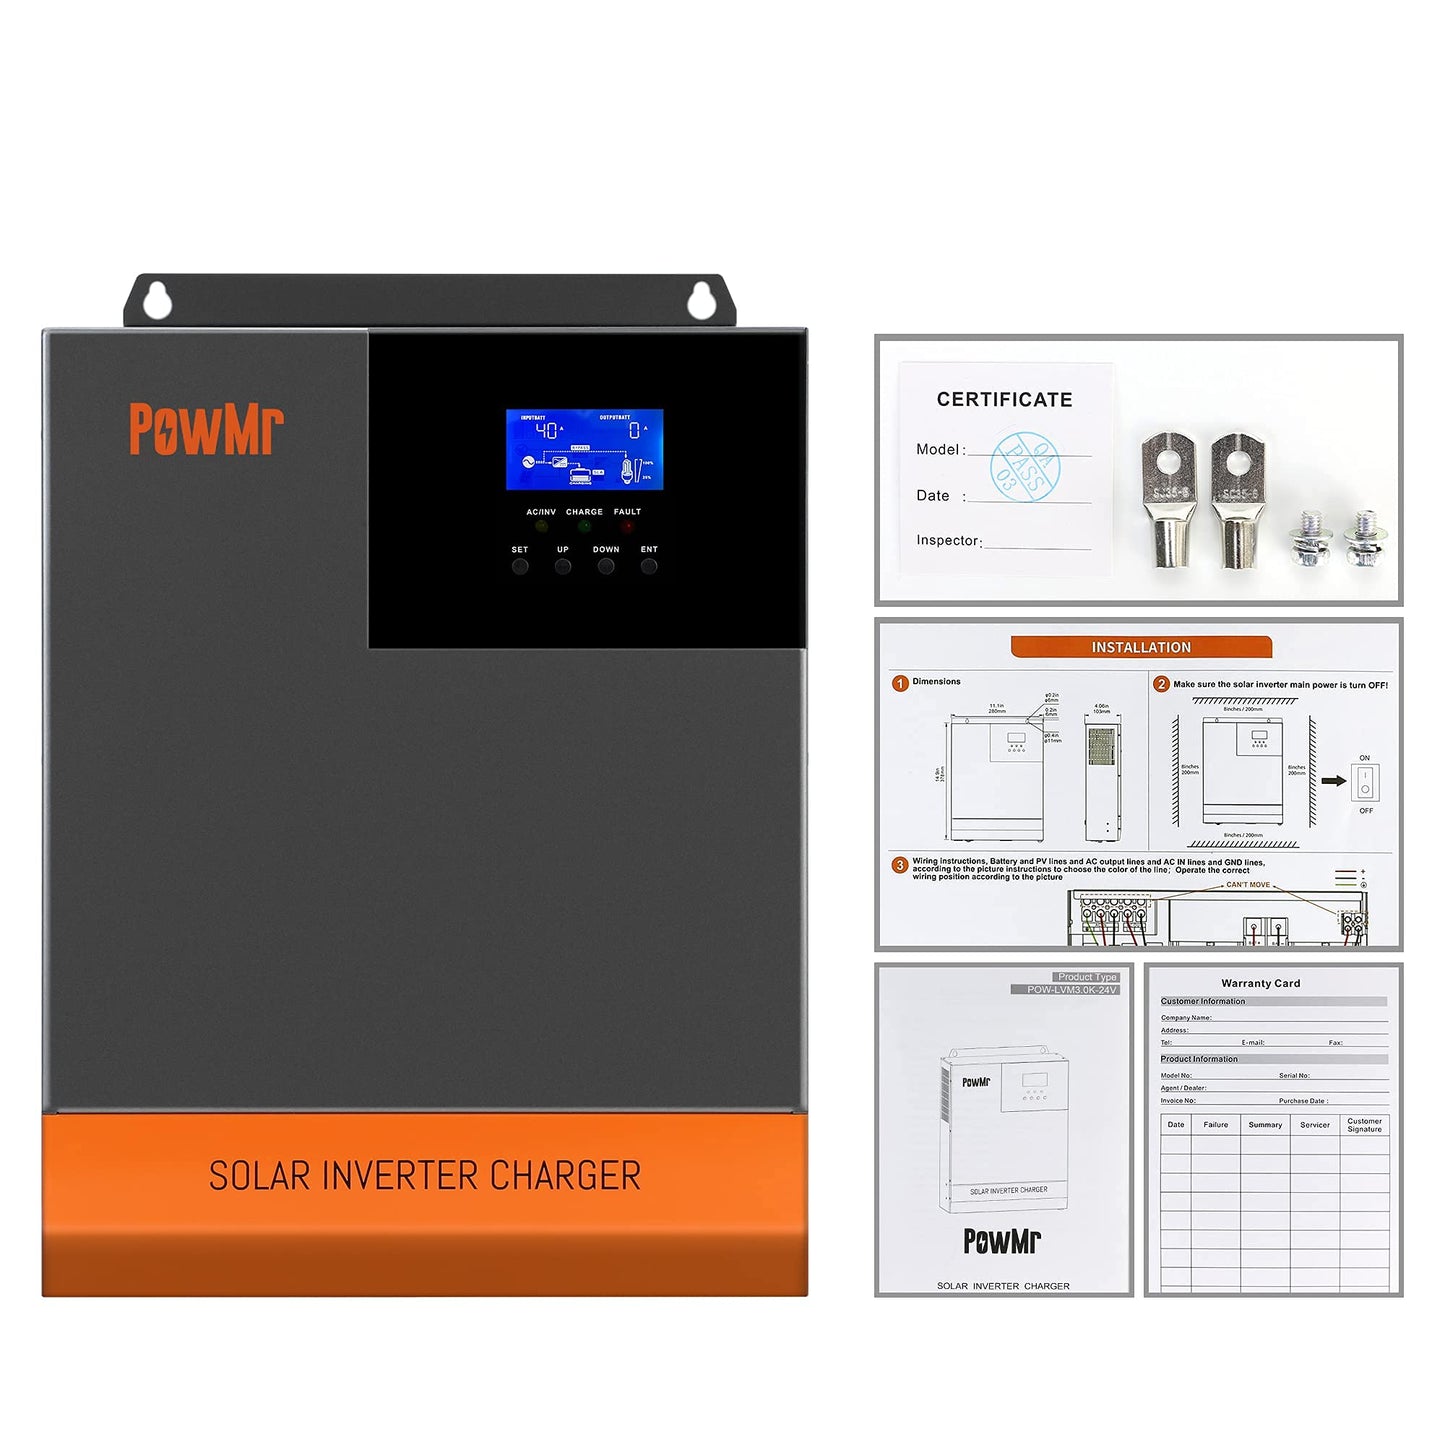 PowMr 110 V Solar-Wechselrichter Hybrid 48 V 24 V 5 kW 3 kW MPPT eingebautes 80 A 60 A Ladegerät reiner Sinus-Hybrid-Wechselrichter 100 V bis 120 V